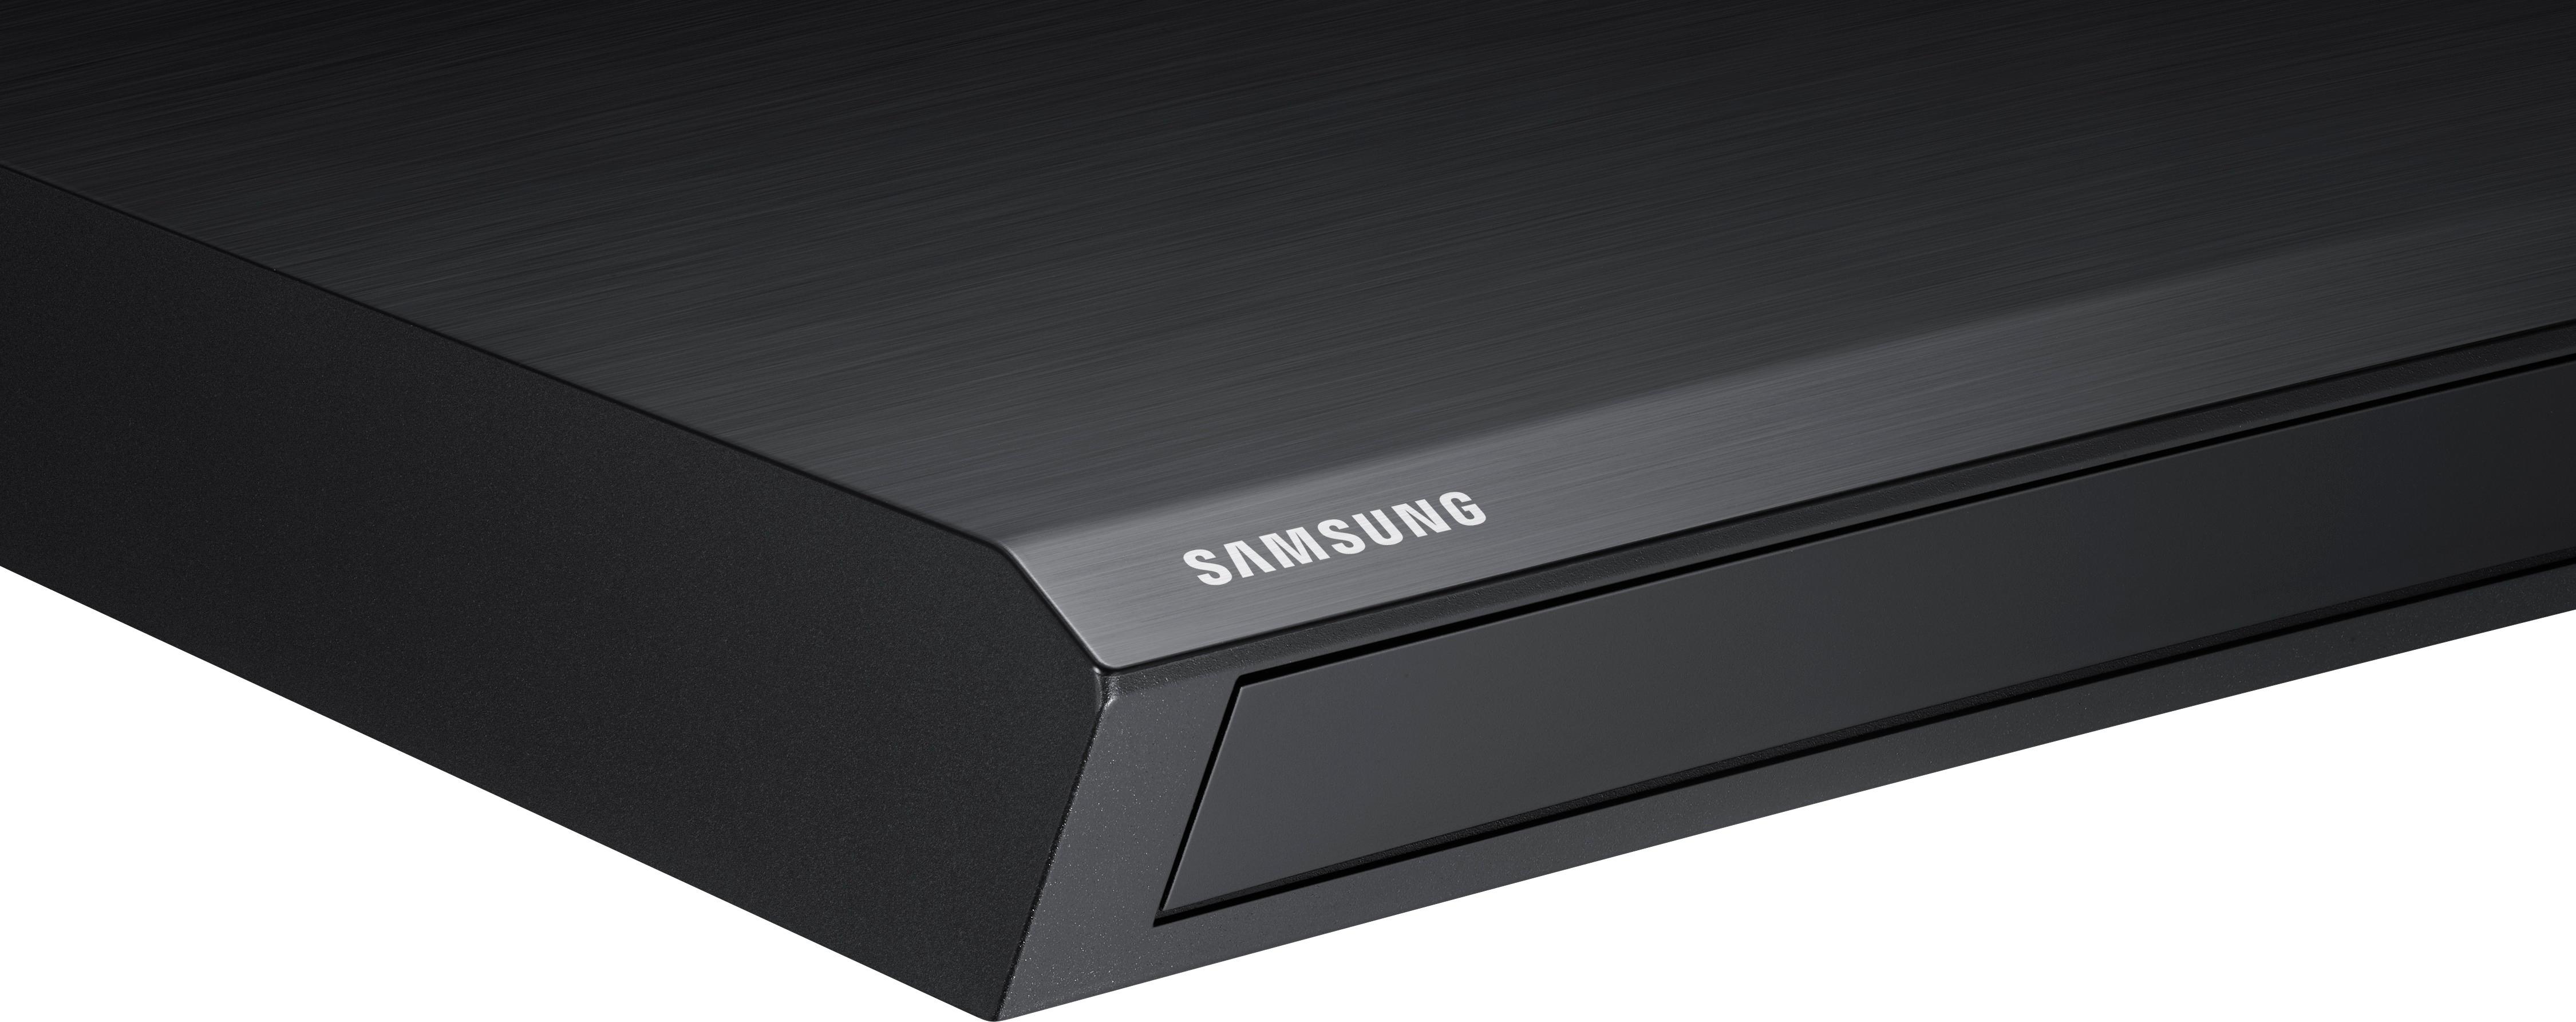 Best Buy Samsung Streaming 4k Ultra Hd Audio Blu Ray Player Black Ubd M7500 Za